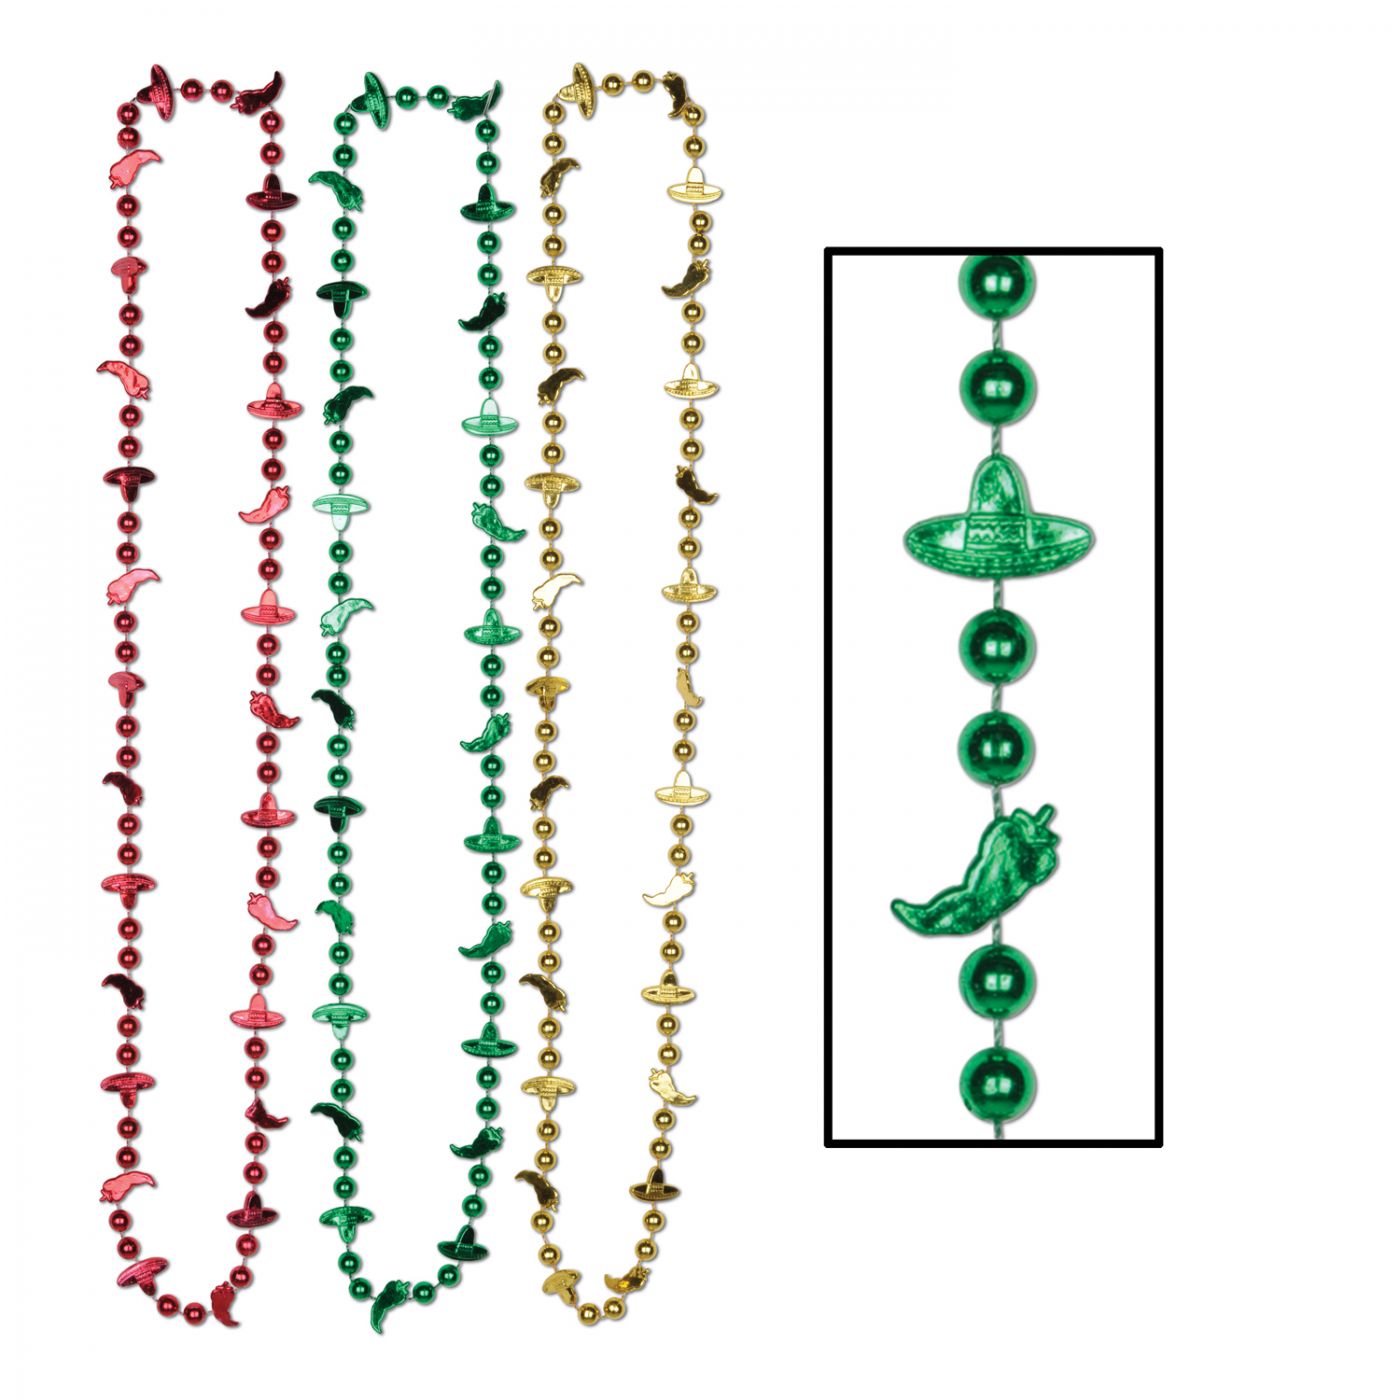 Fiesta Beads (12) image